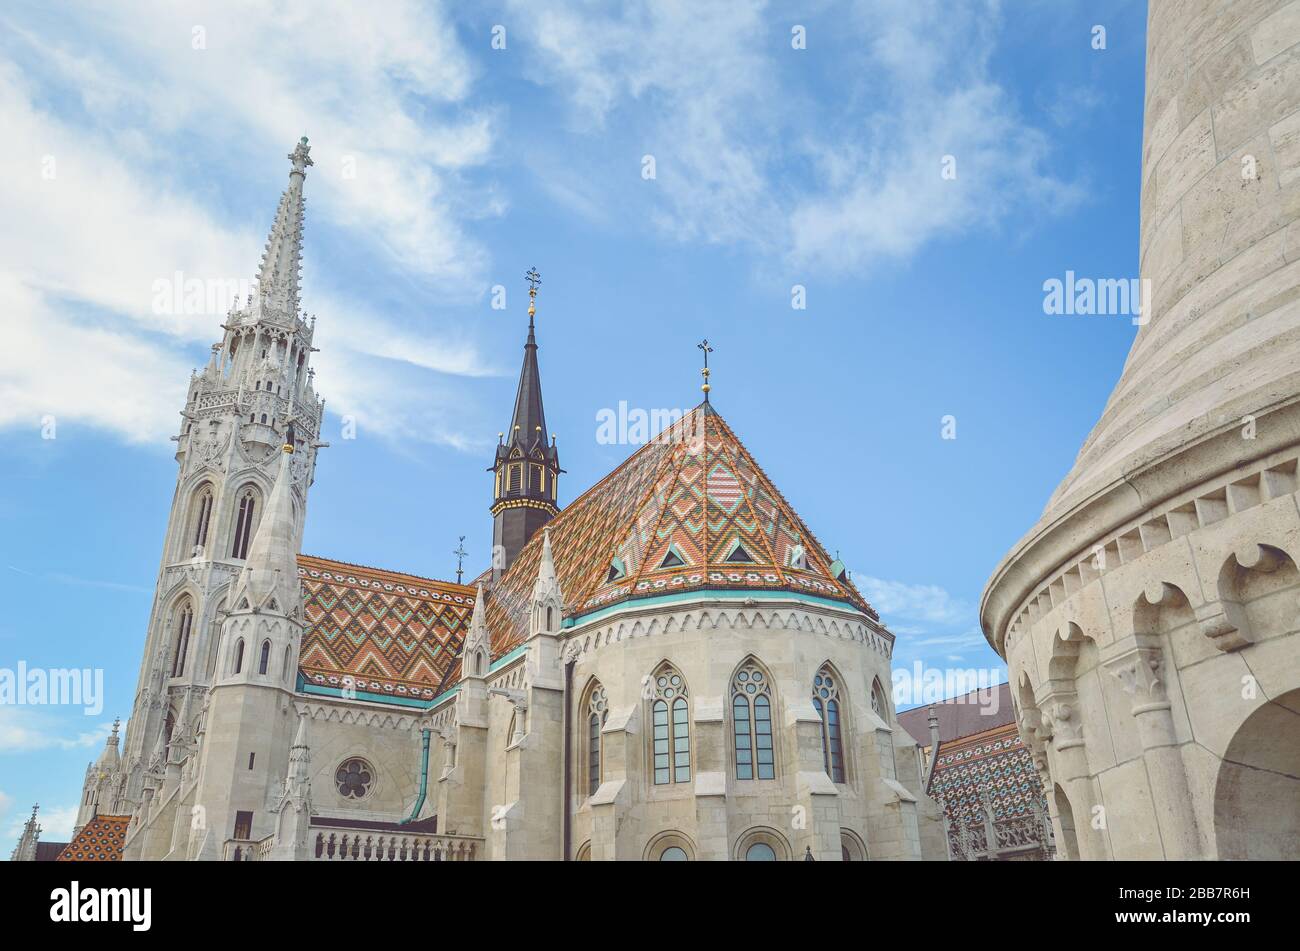 La aguja de la famosa iglesia Matthias en Budapest, Hungría. Iglesia Católica Romana construida en estilo gótico. Techo de baldosas de color naranja. Cielo azul y nubes blancas arriba. Foto horizontal con filtro. Foto de stock